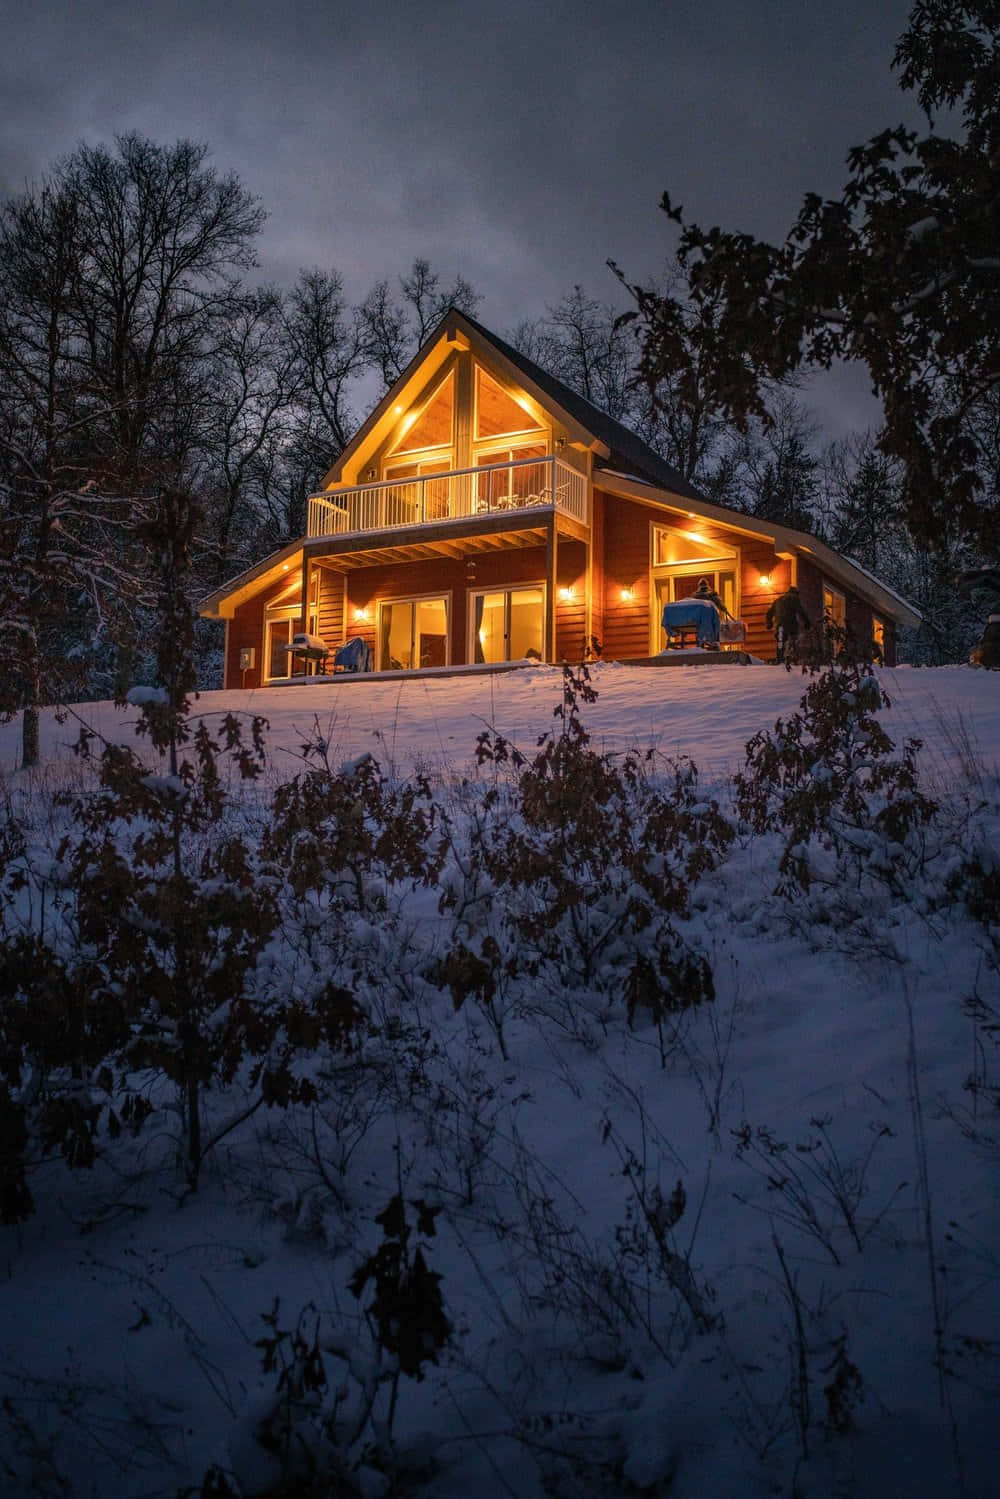 Enchanting Cozy Winter Cabin Nestled in Snowy Forest Wallpaper